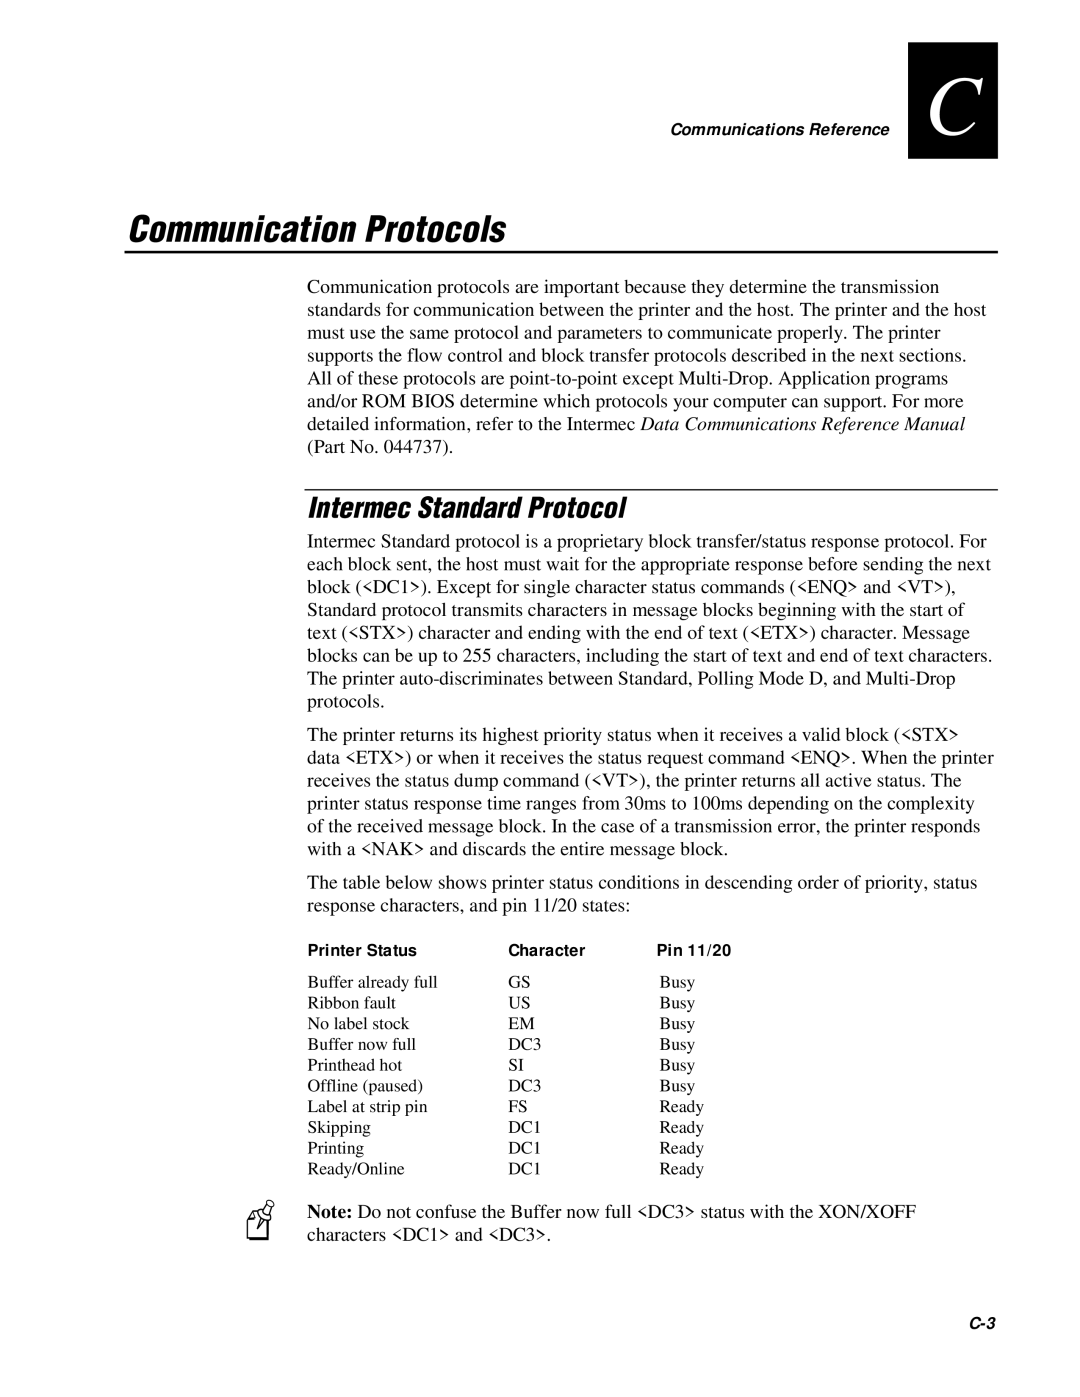 IBM EasyCoder 3400e user manual Communication Protocols, Intermec Standard Protocol, Printer Status, Character 